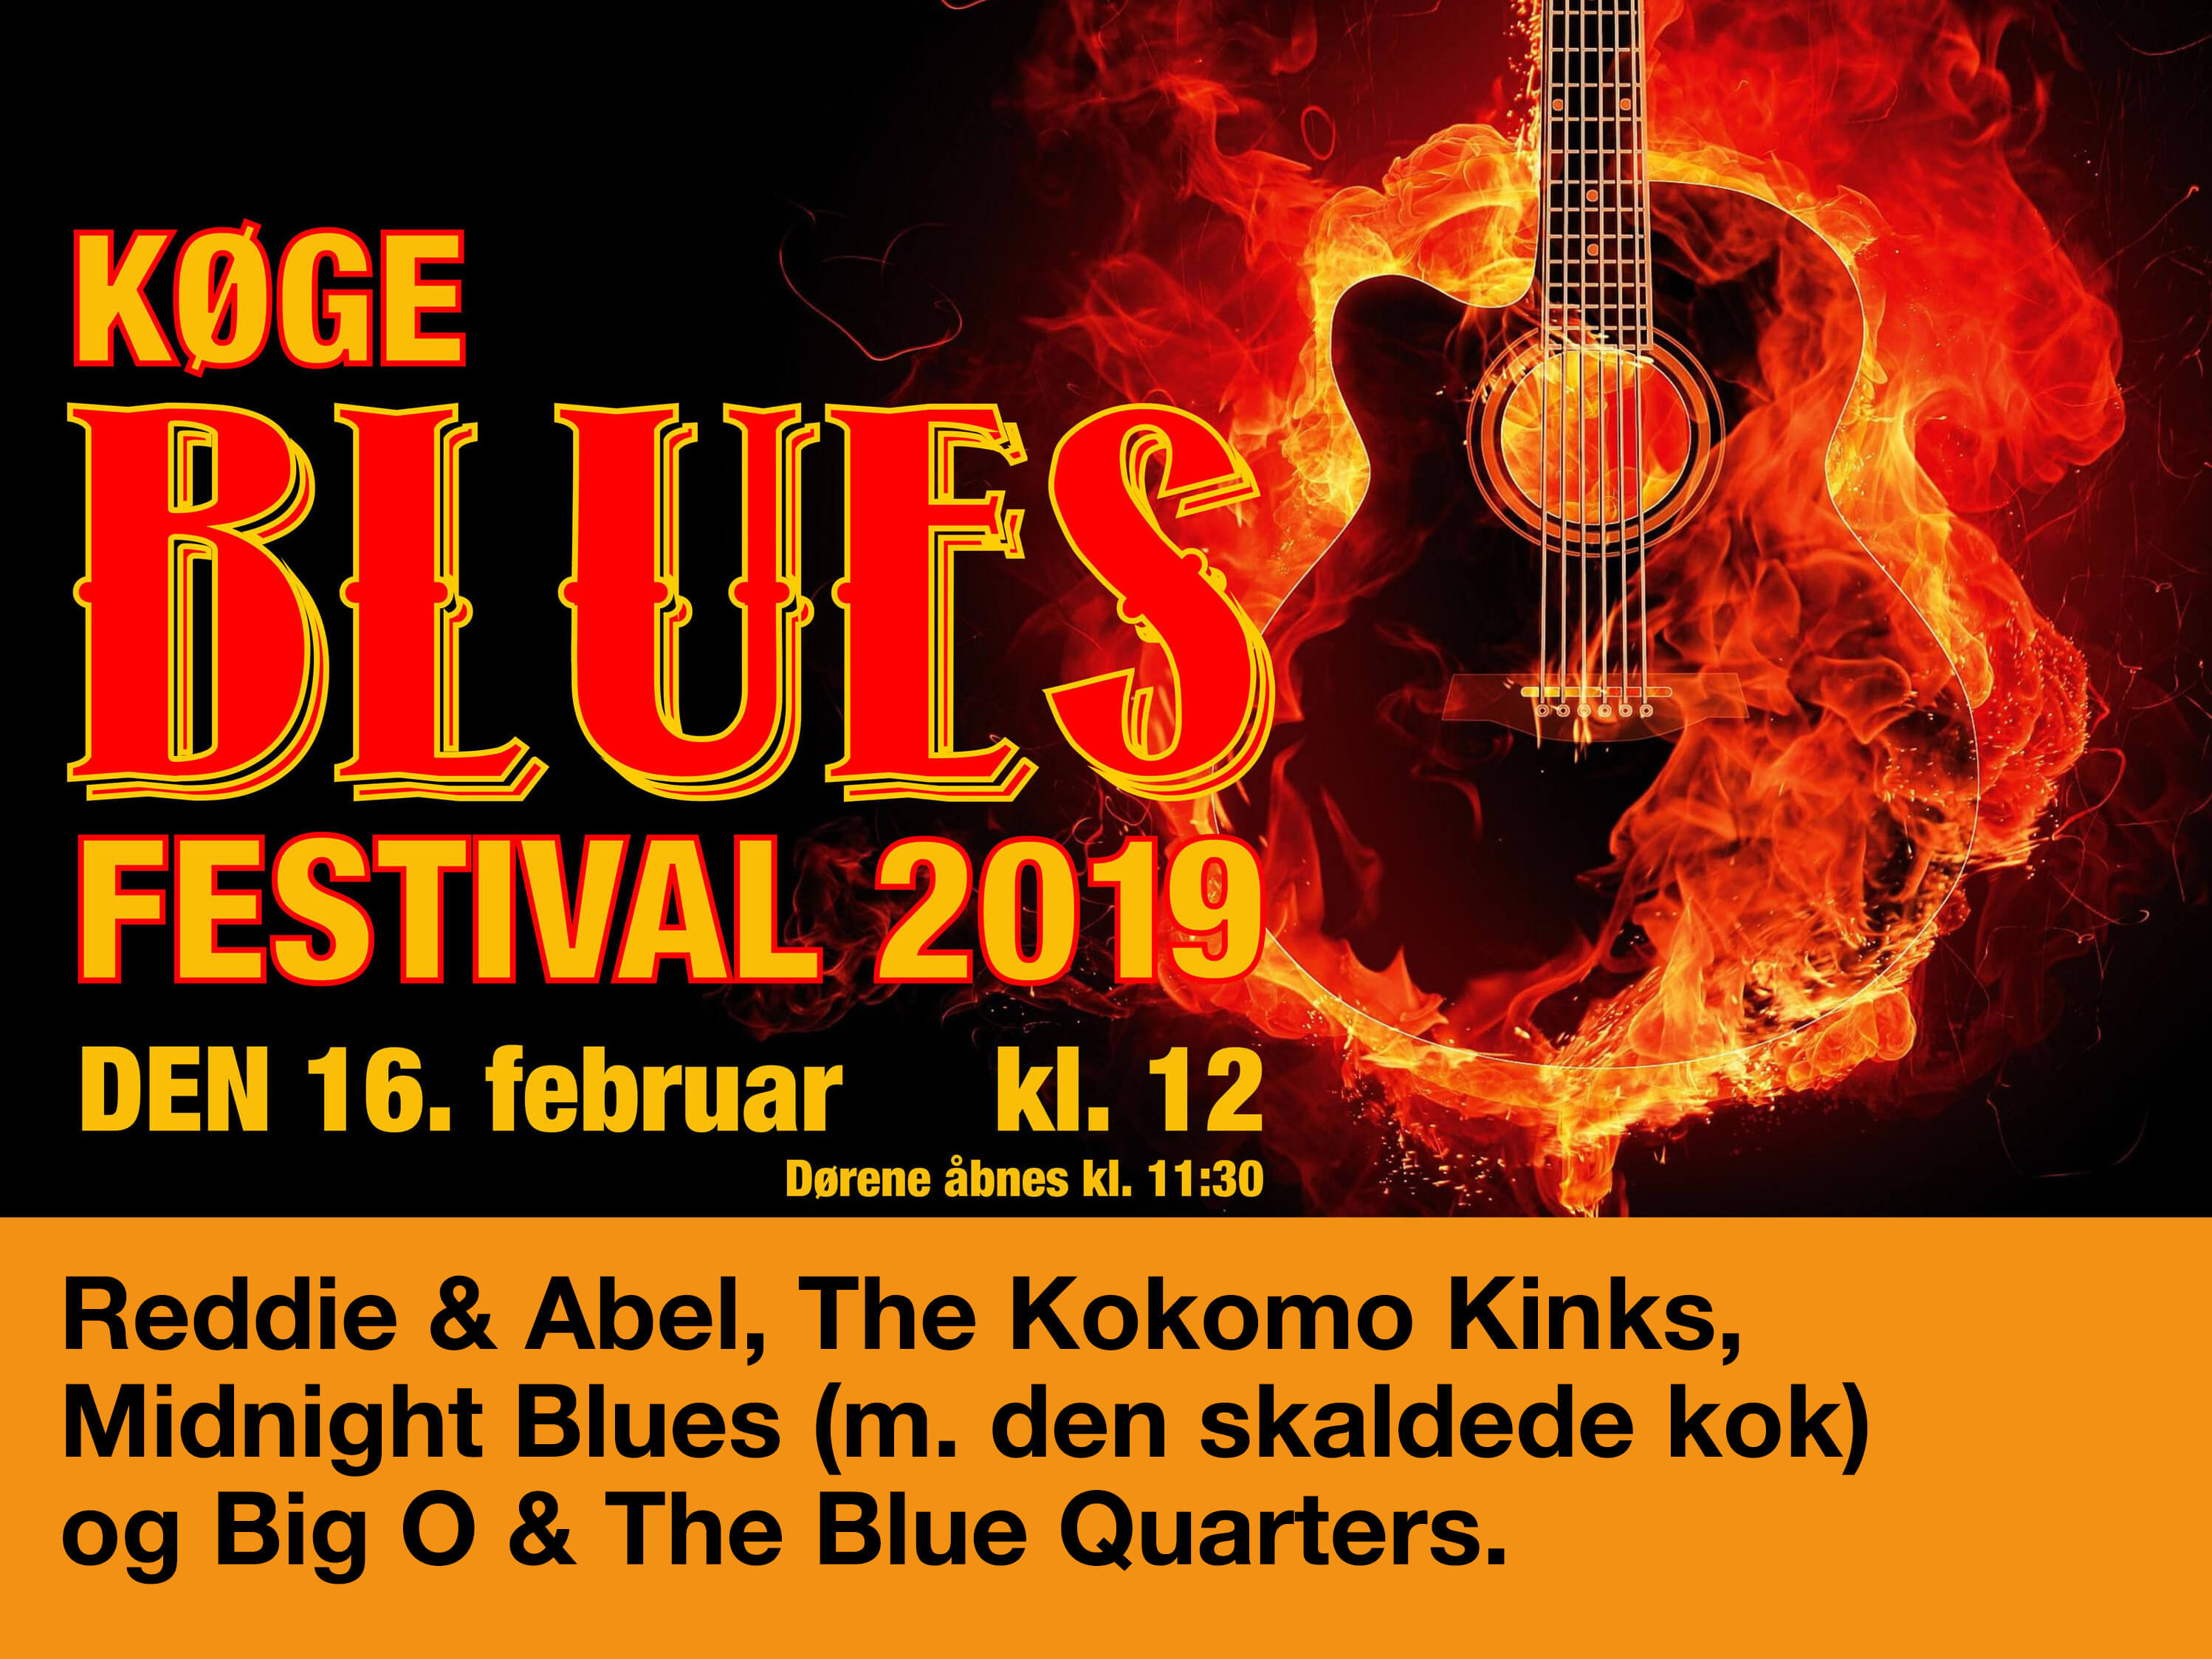 Køge Blues Festival, Lørdag d. 16. februar 2019 kl. 12.00 - 18.00.